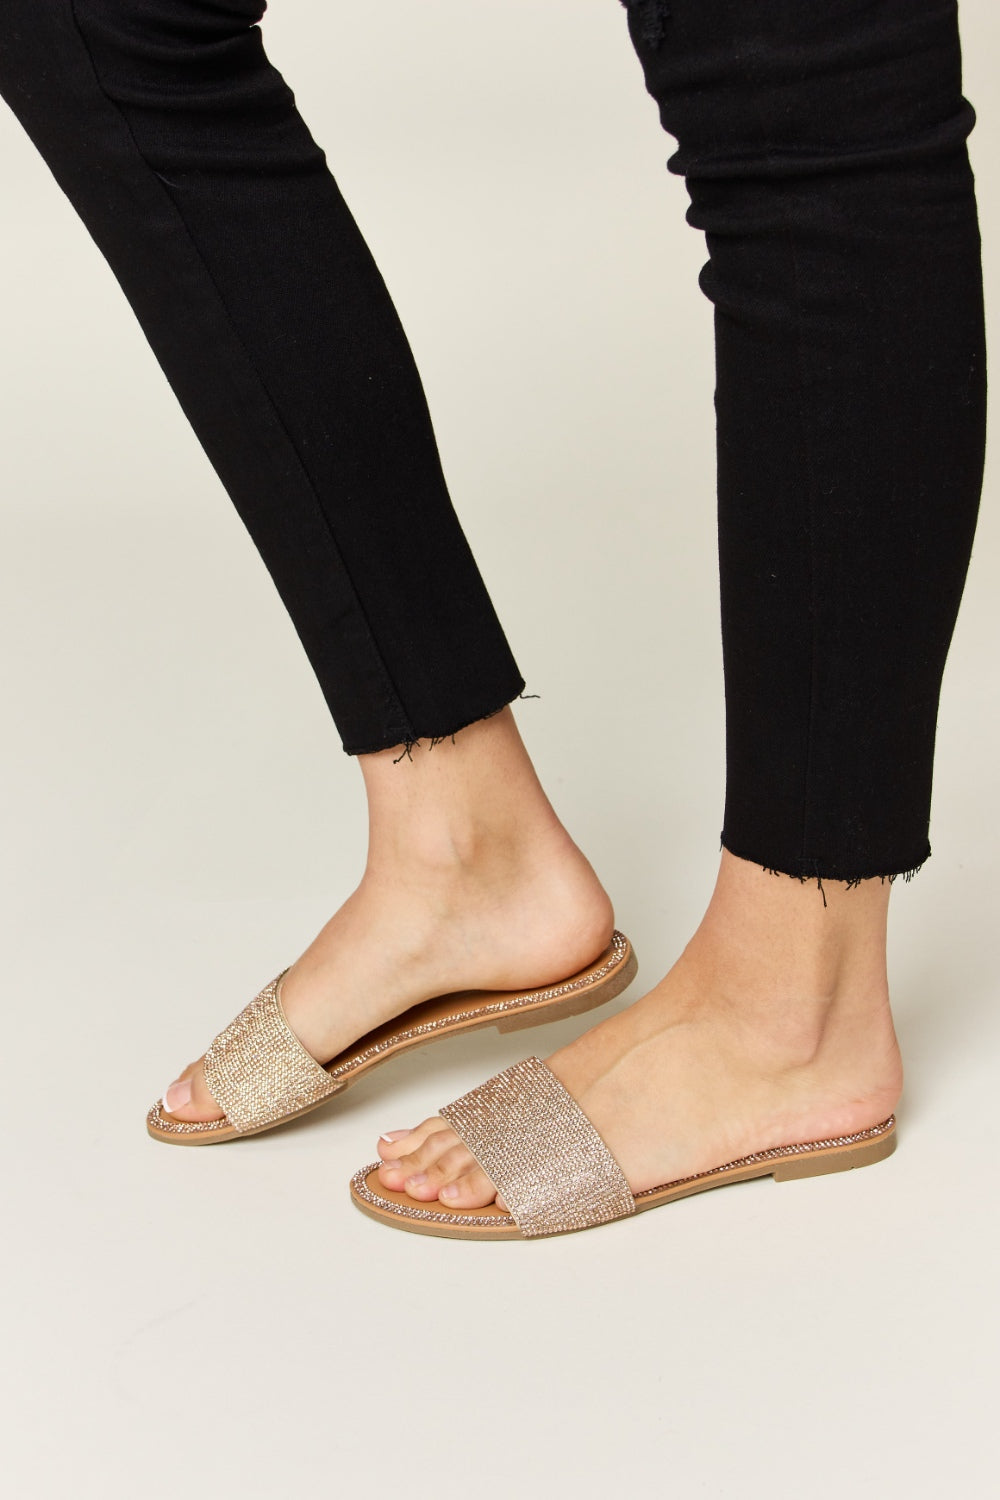 Rosy Gleam Rhinestone Flat Sandals